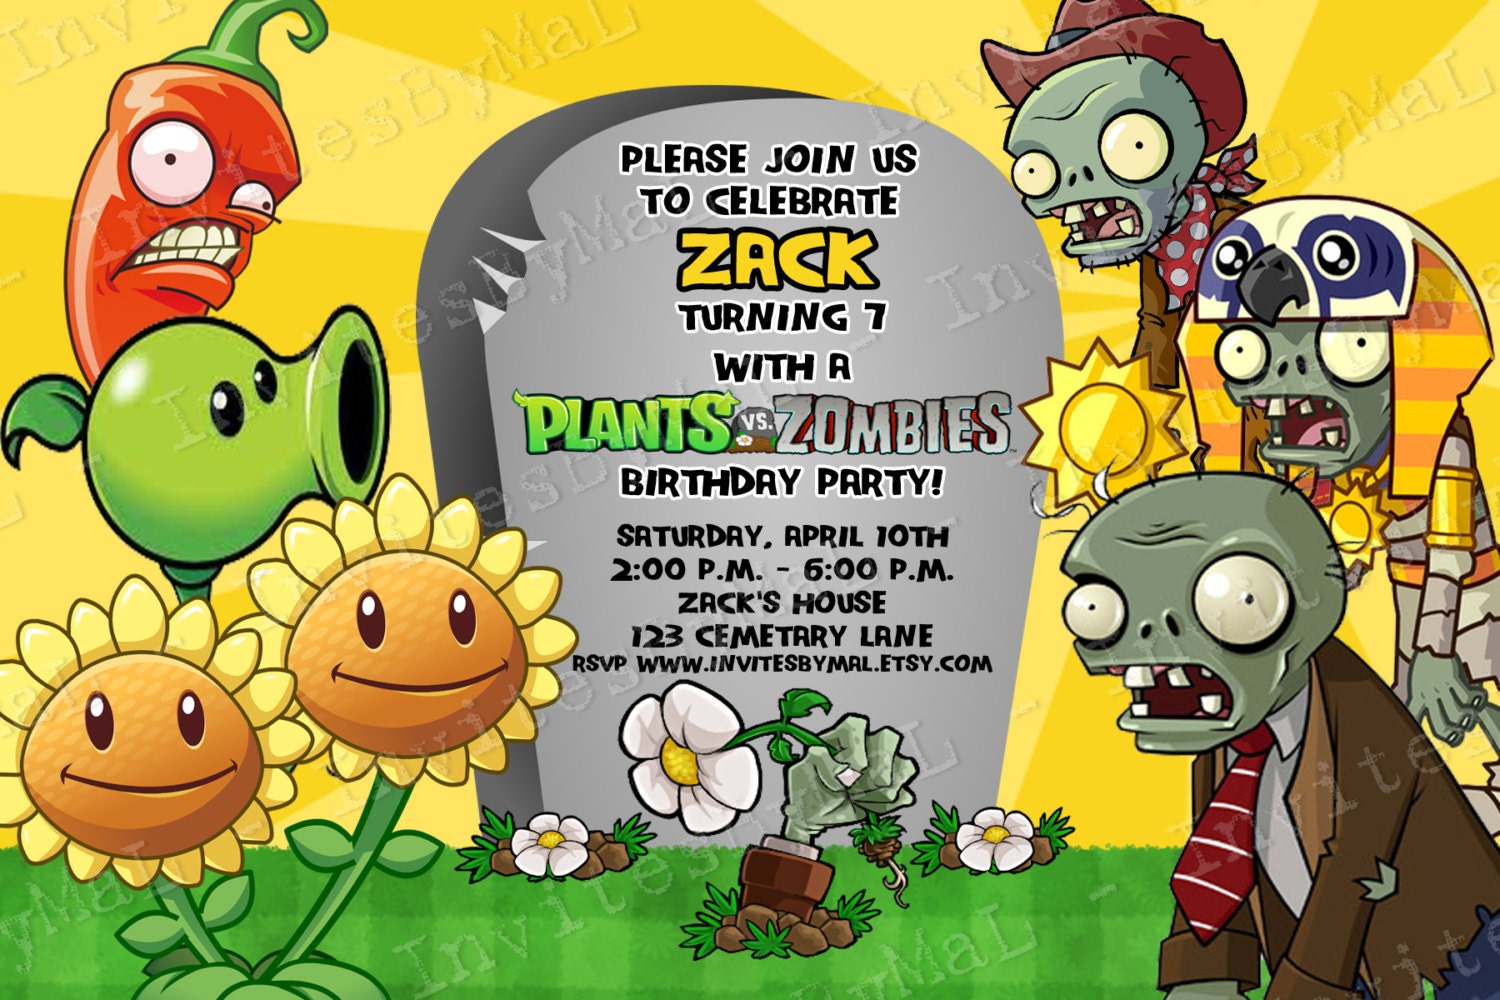 plants-vs-zombies-invitation-by-invitesbymal-on-etsy